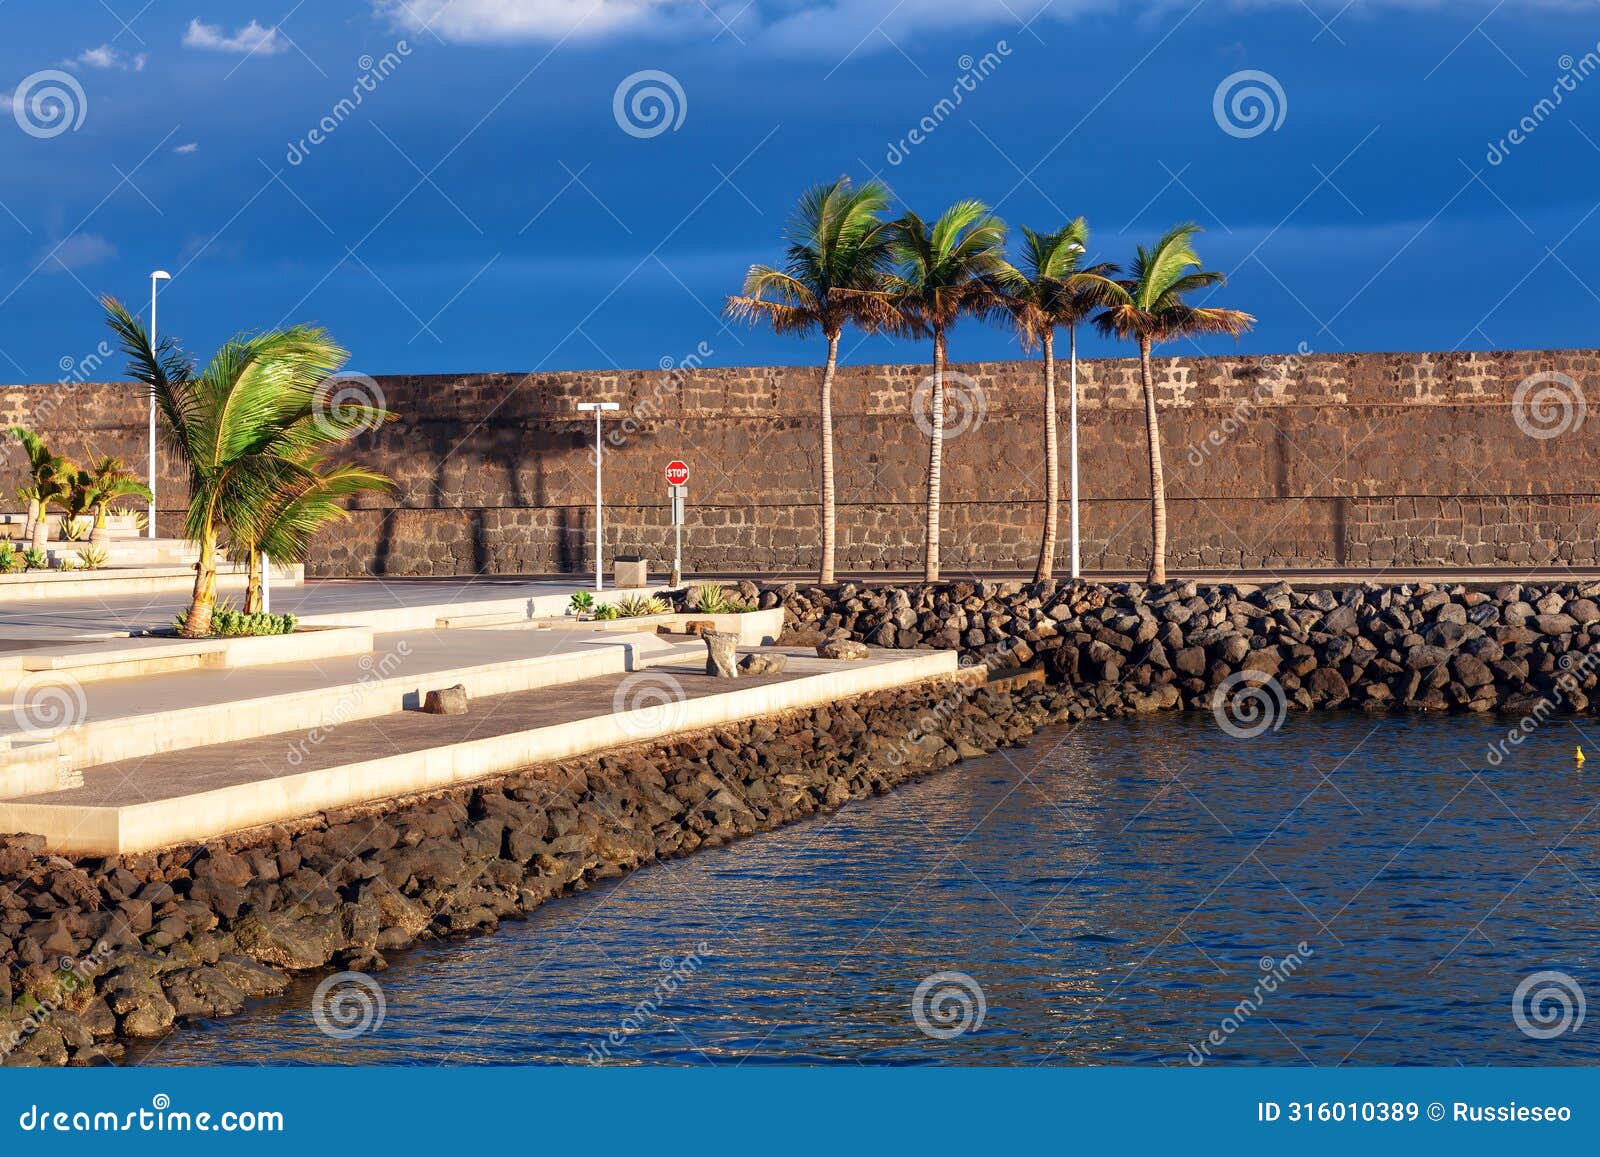 embankment of arrecife city of lanzarote